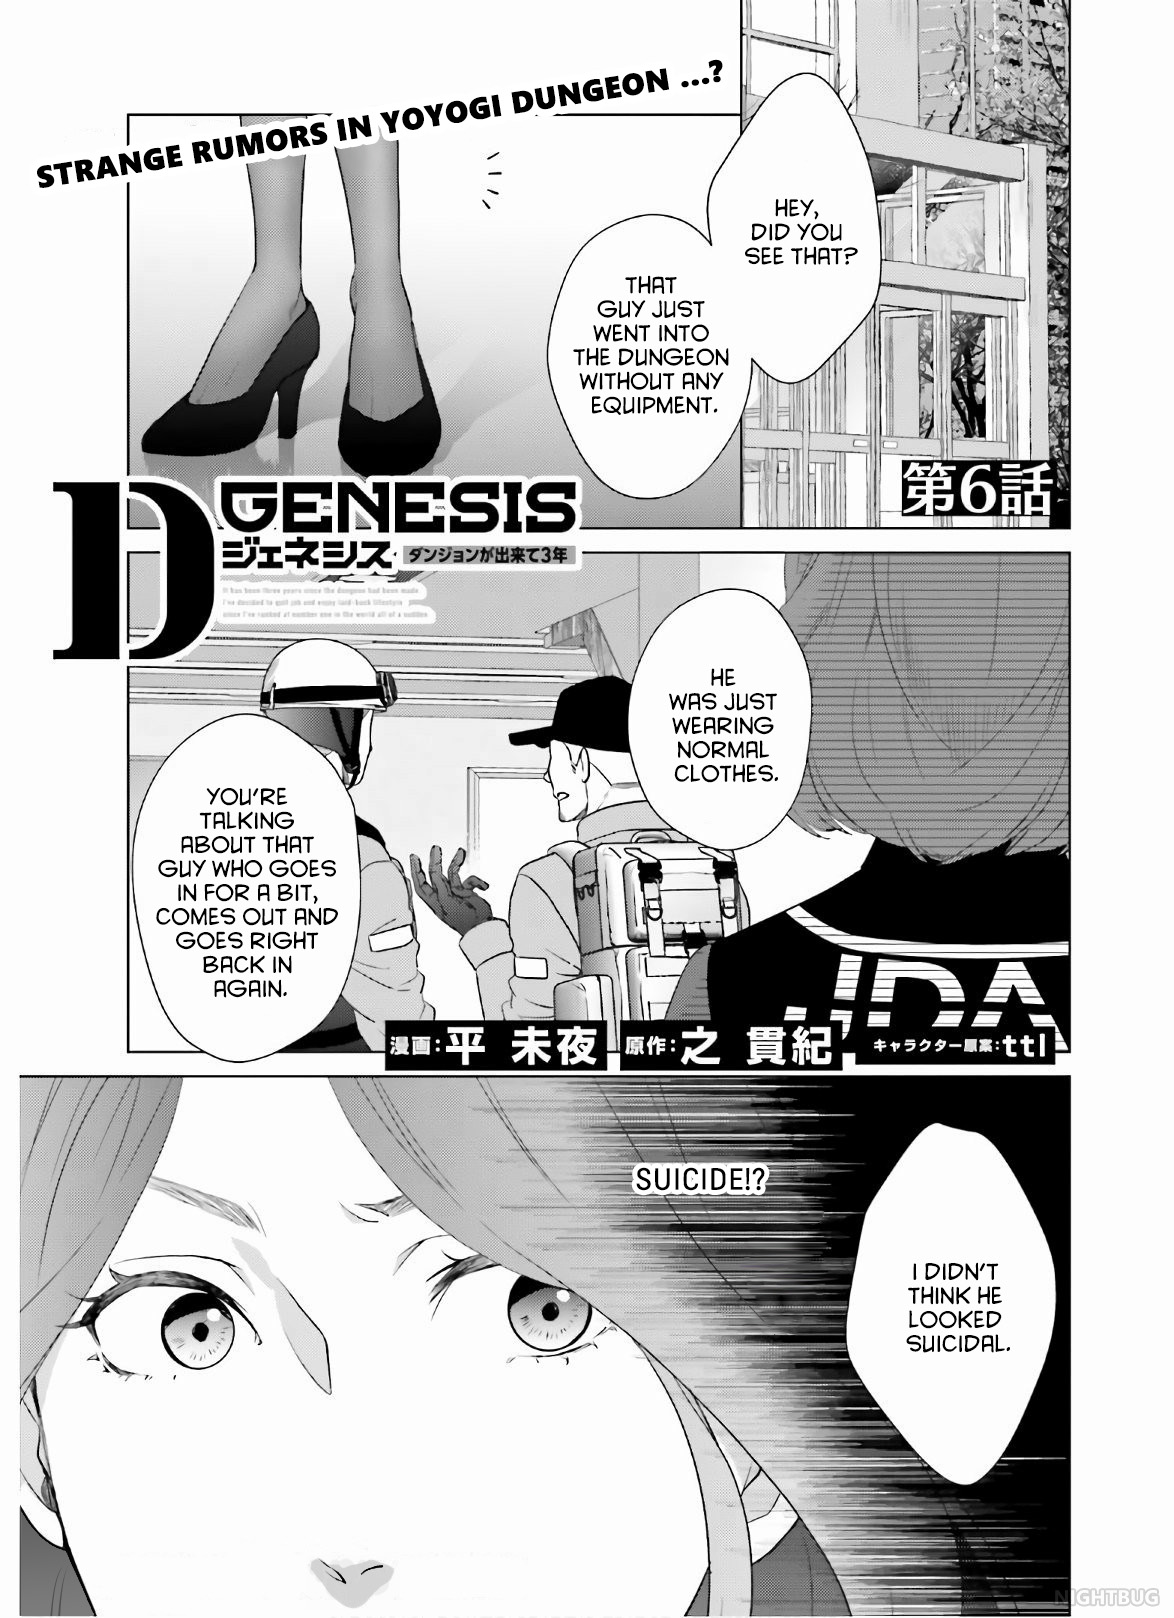 D Genesis: Dungeon Ga Dekite 3-Nen - Page 1